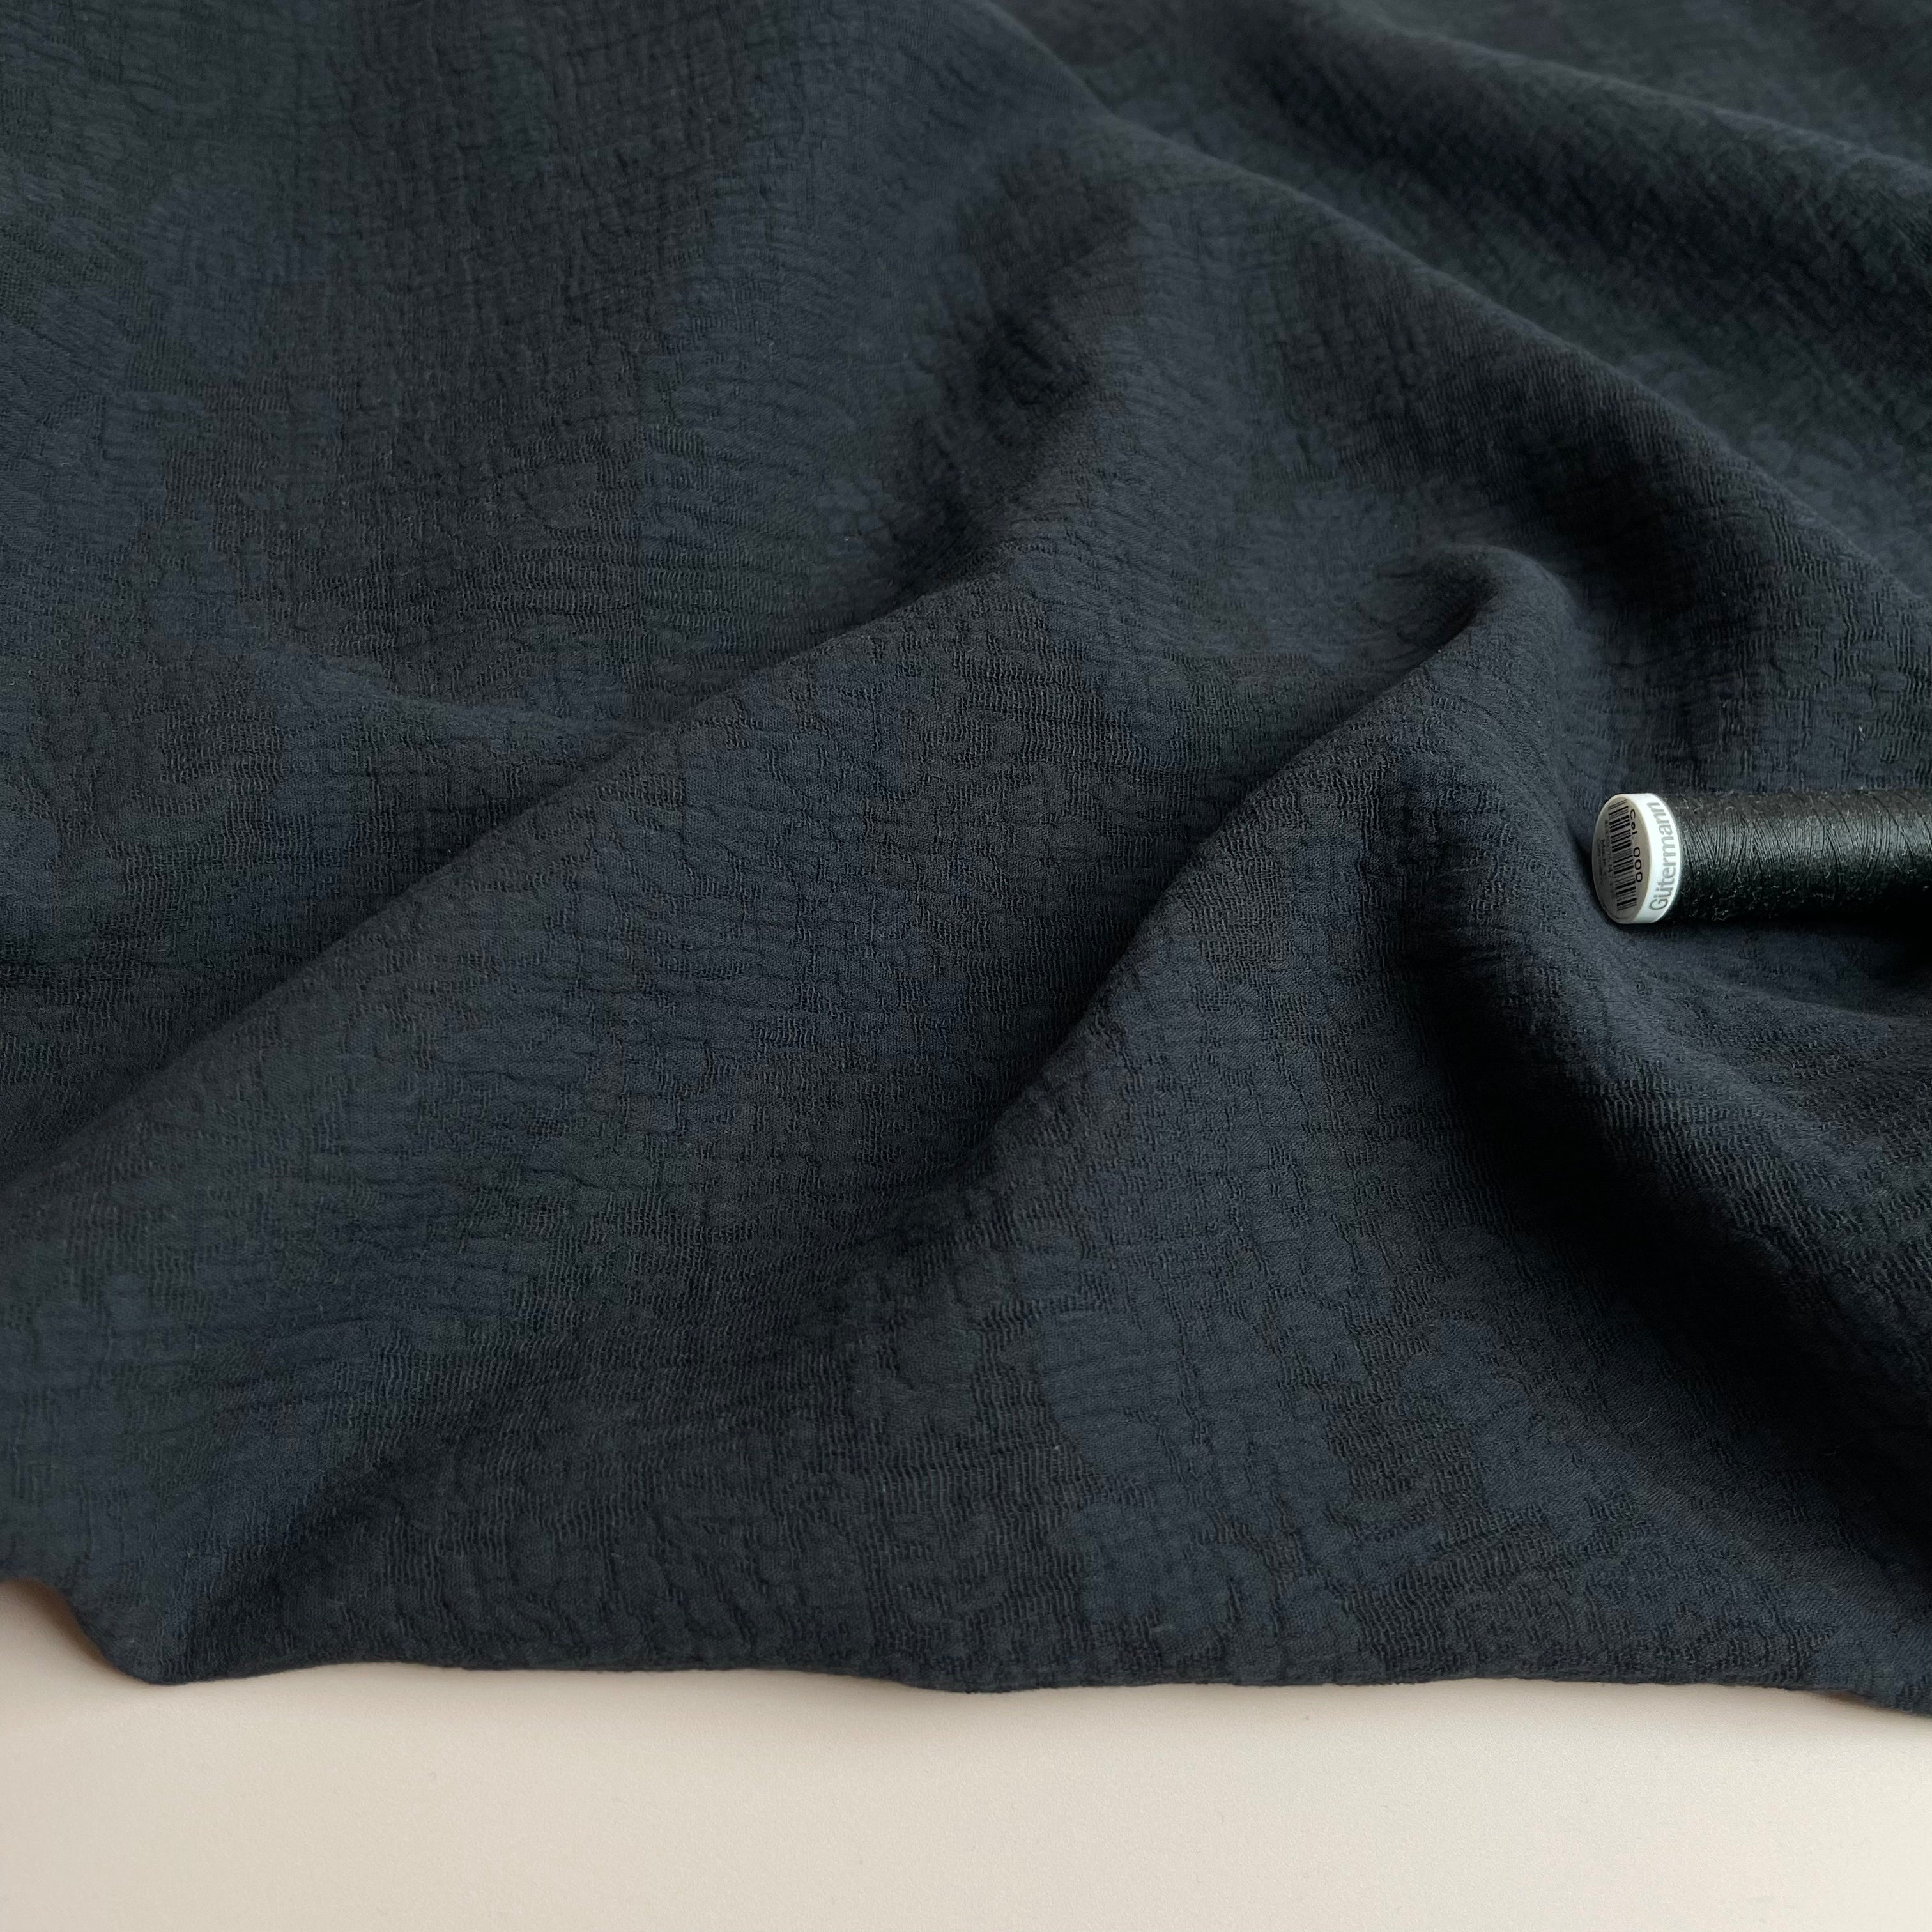 Damask Black Cotton Linen Jacquard Fabric